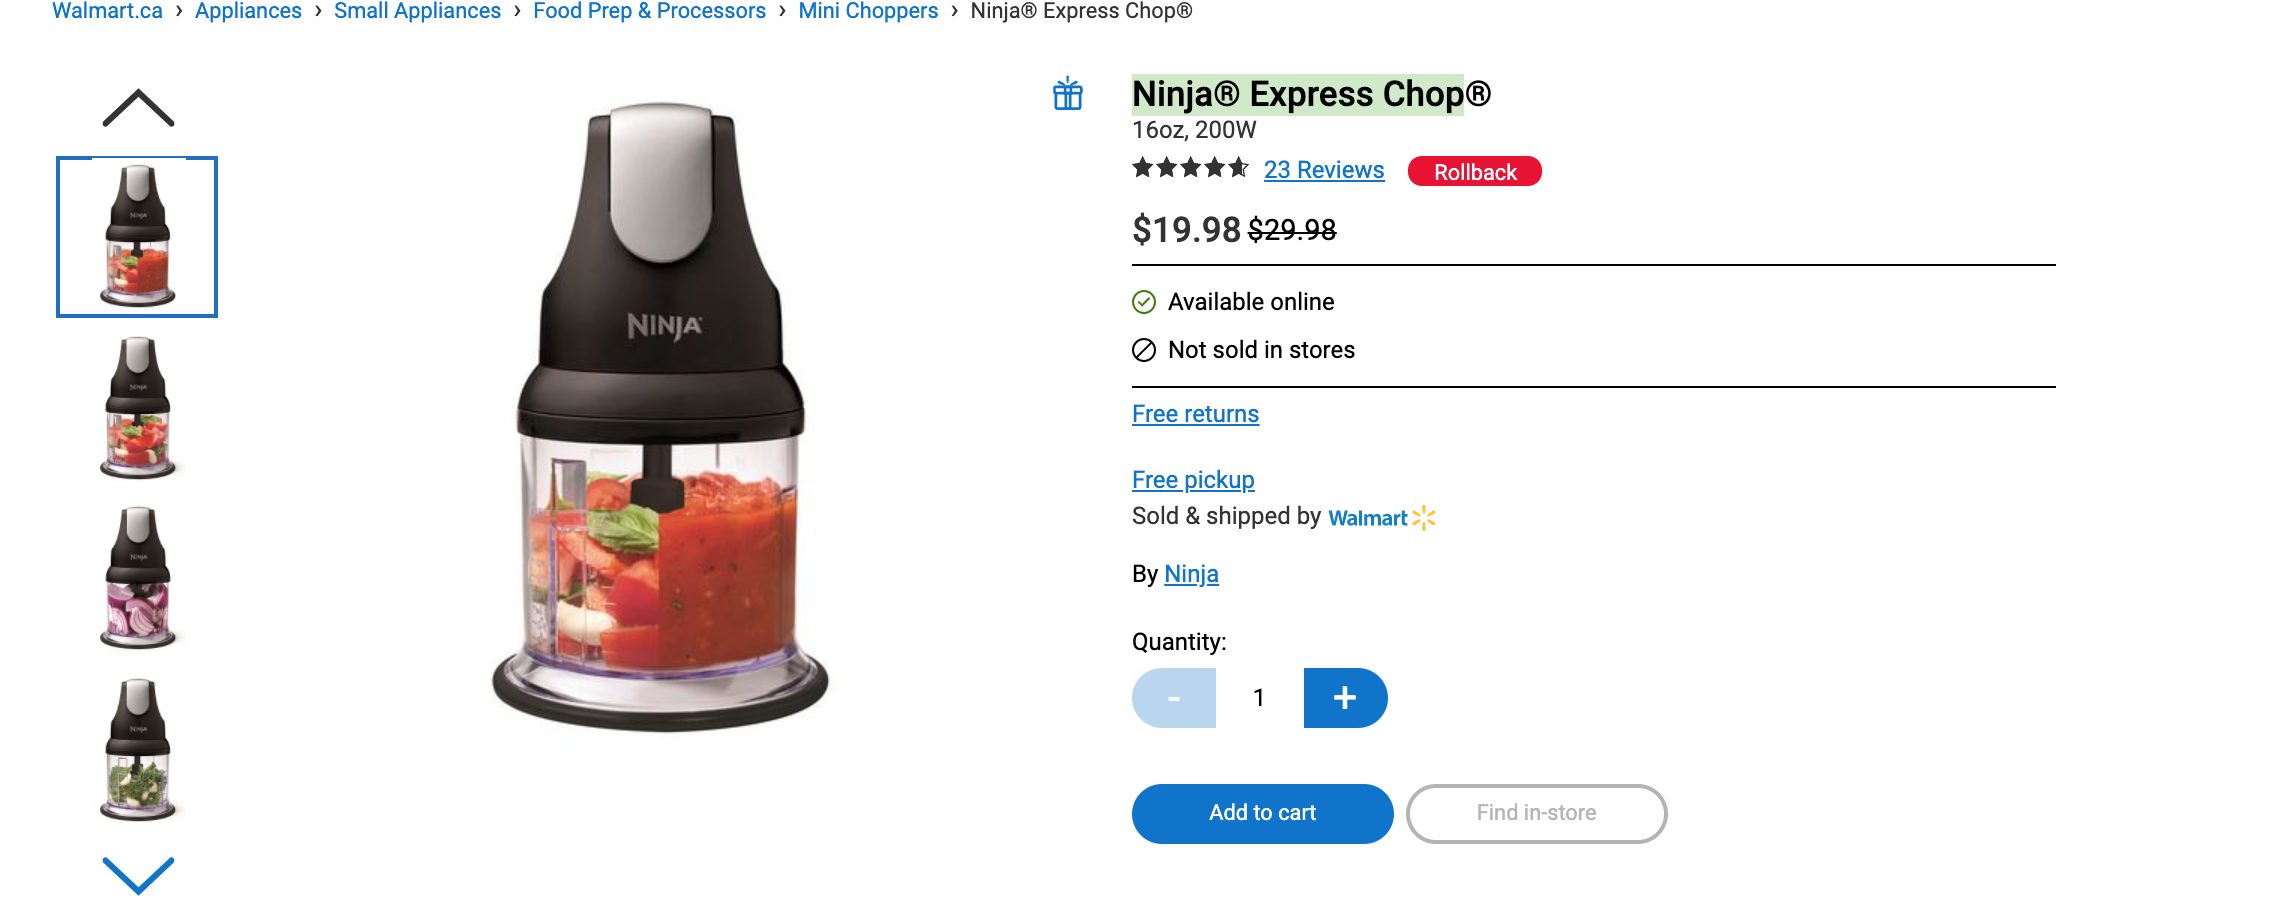 Ninja Express Chop Professional